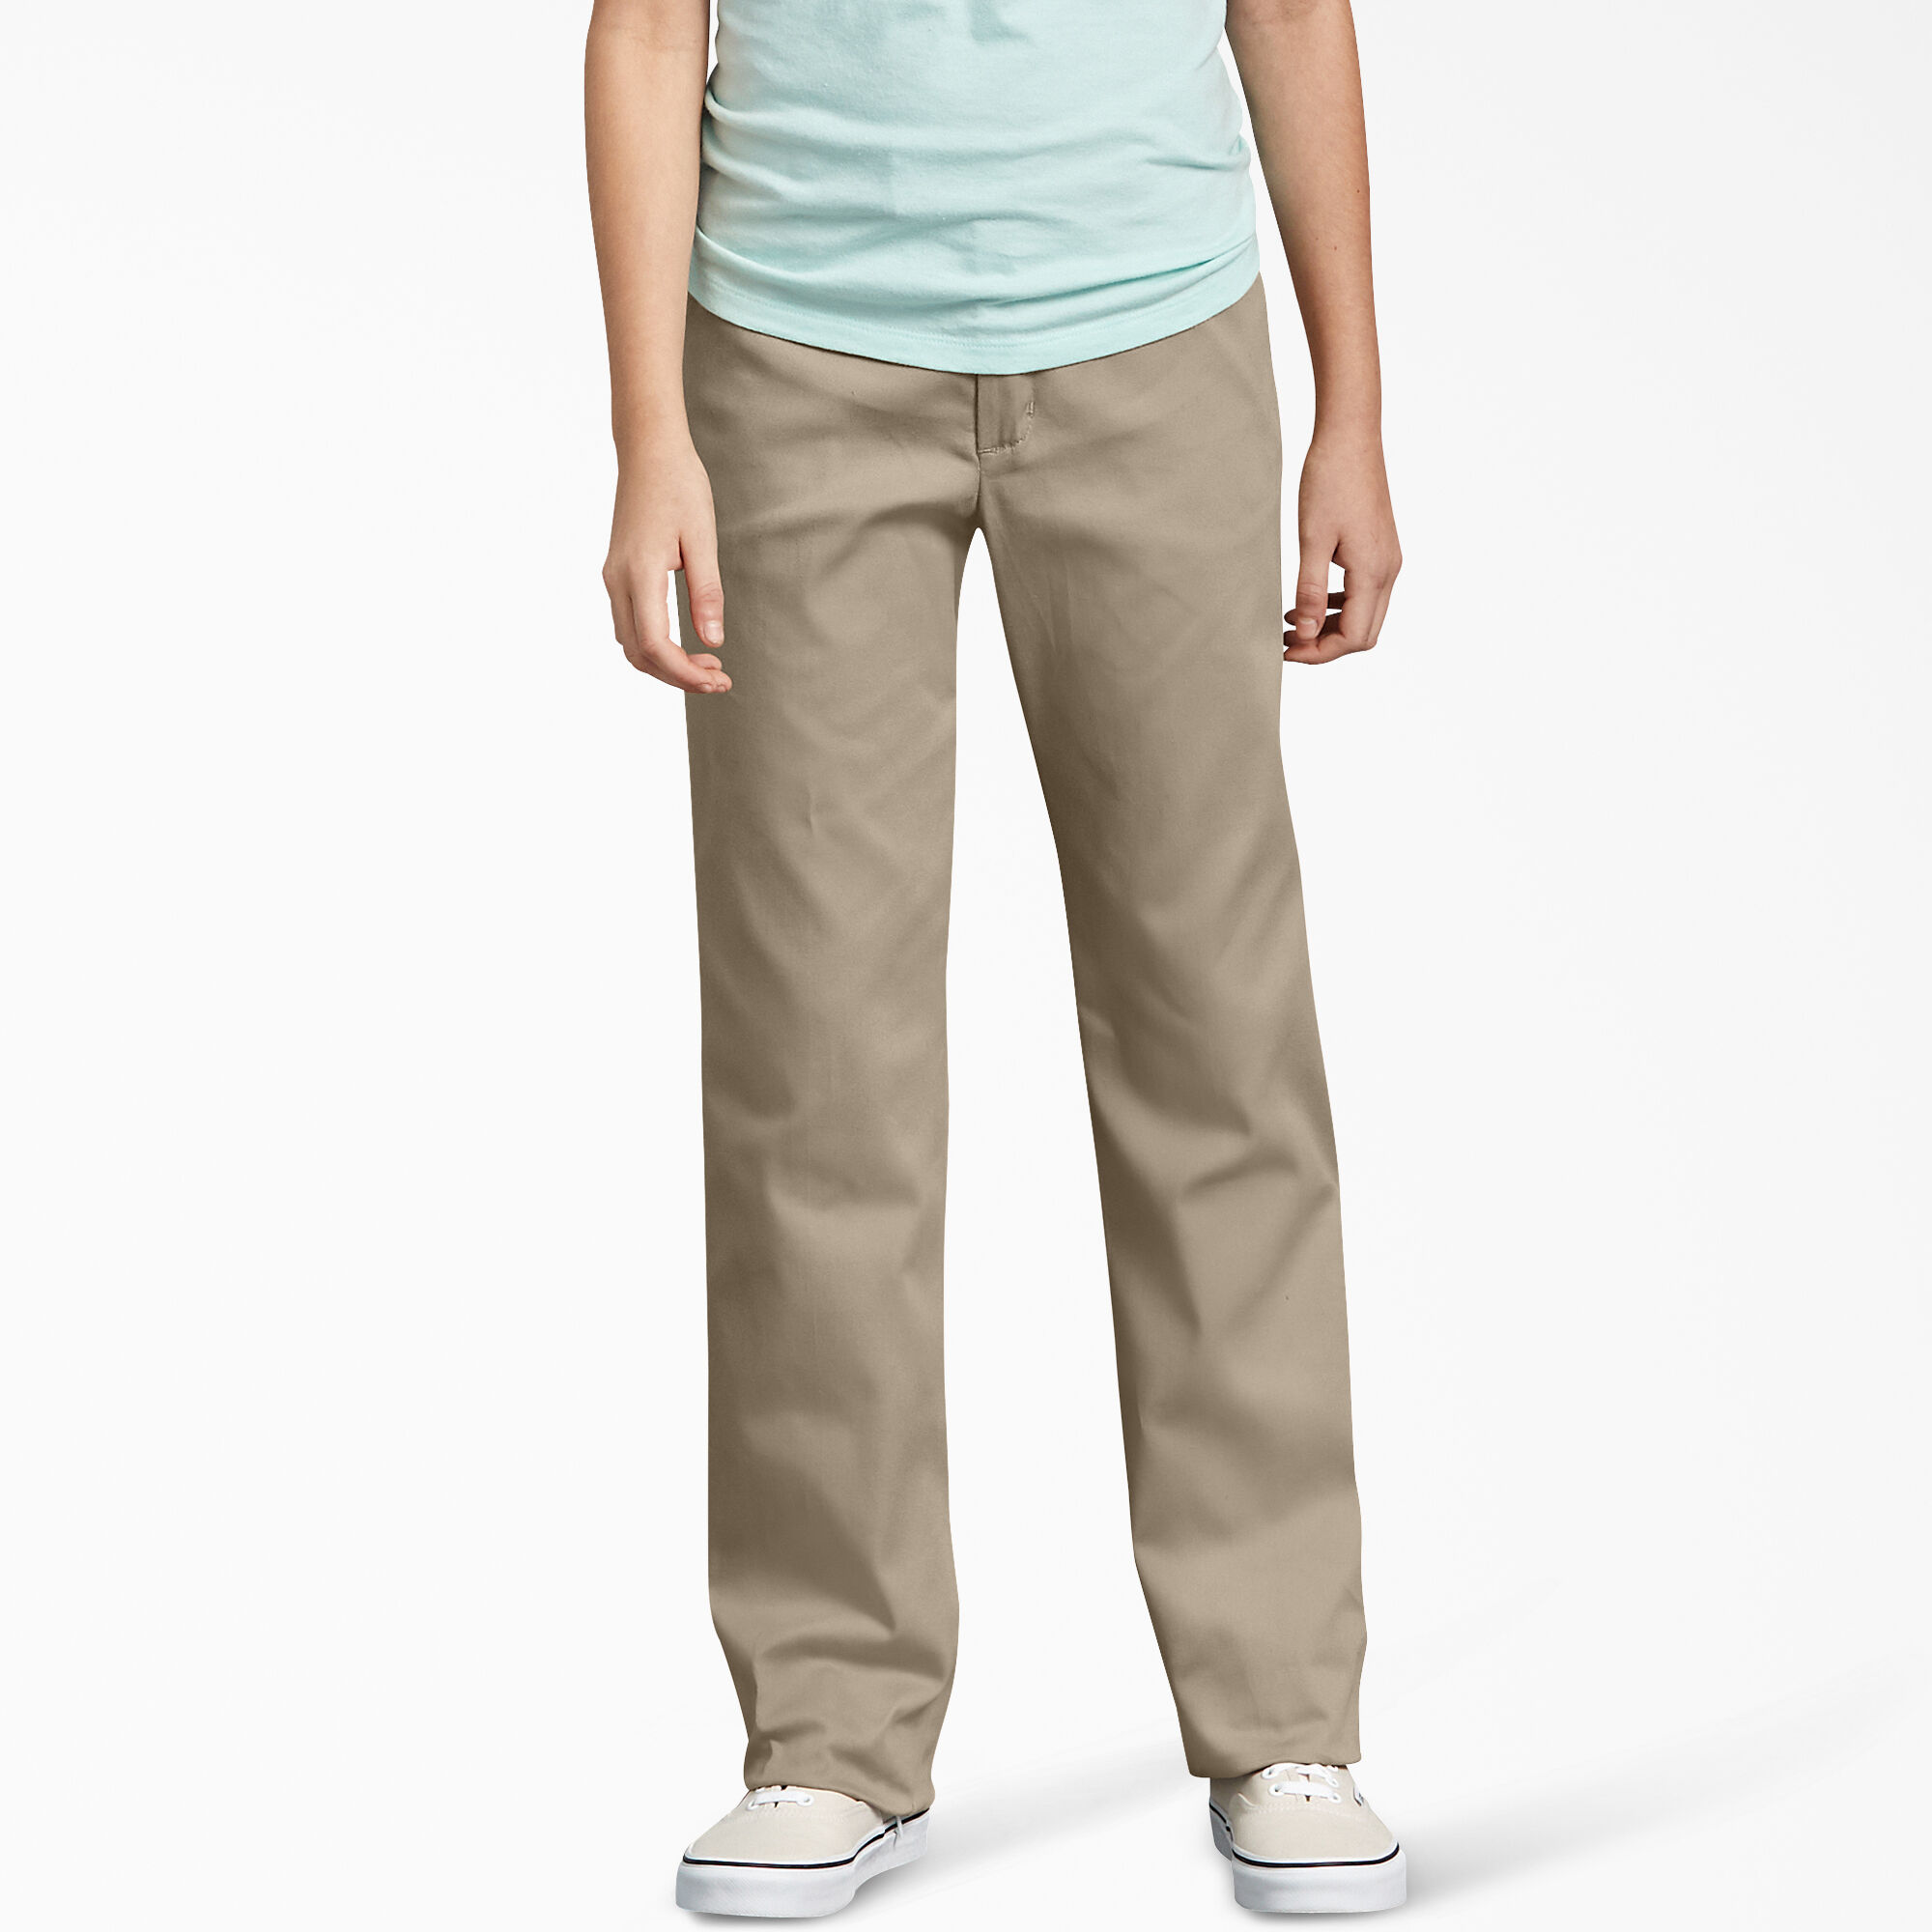 khaki skinny pants for girl juniors